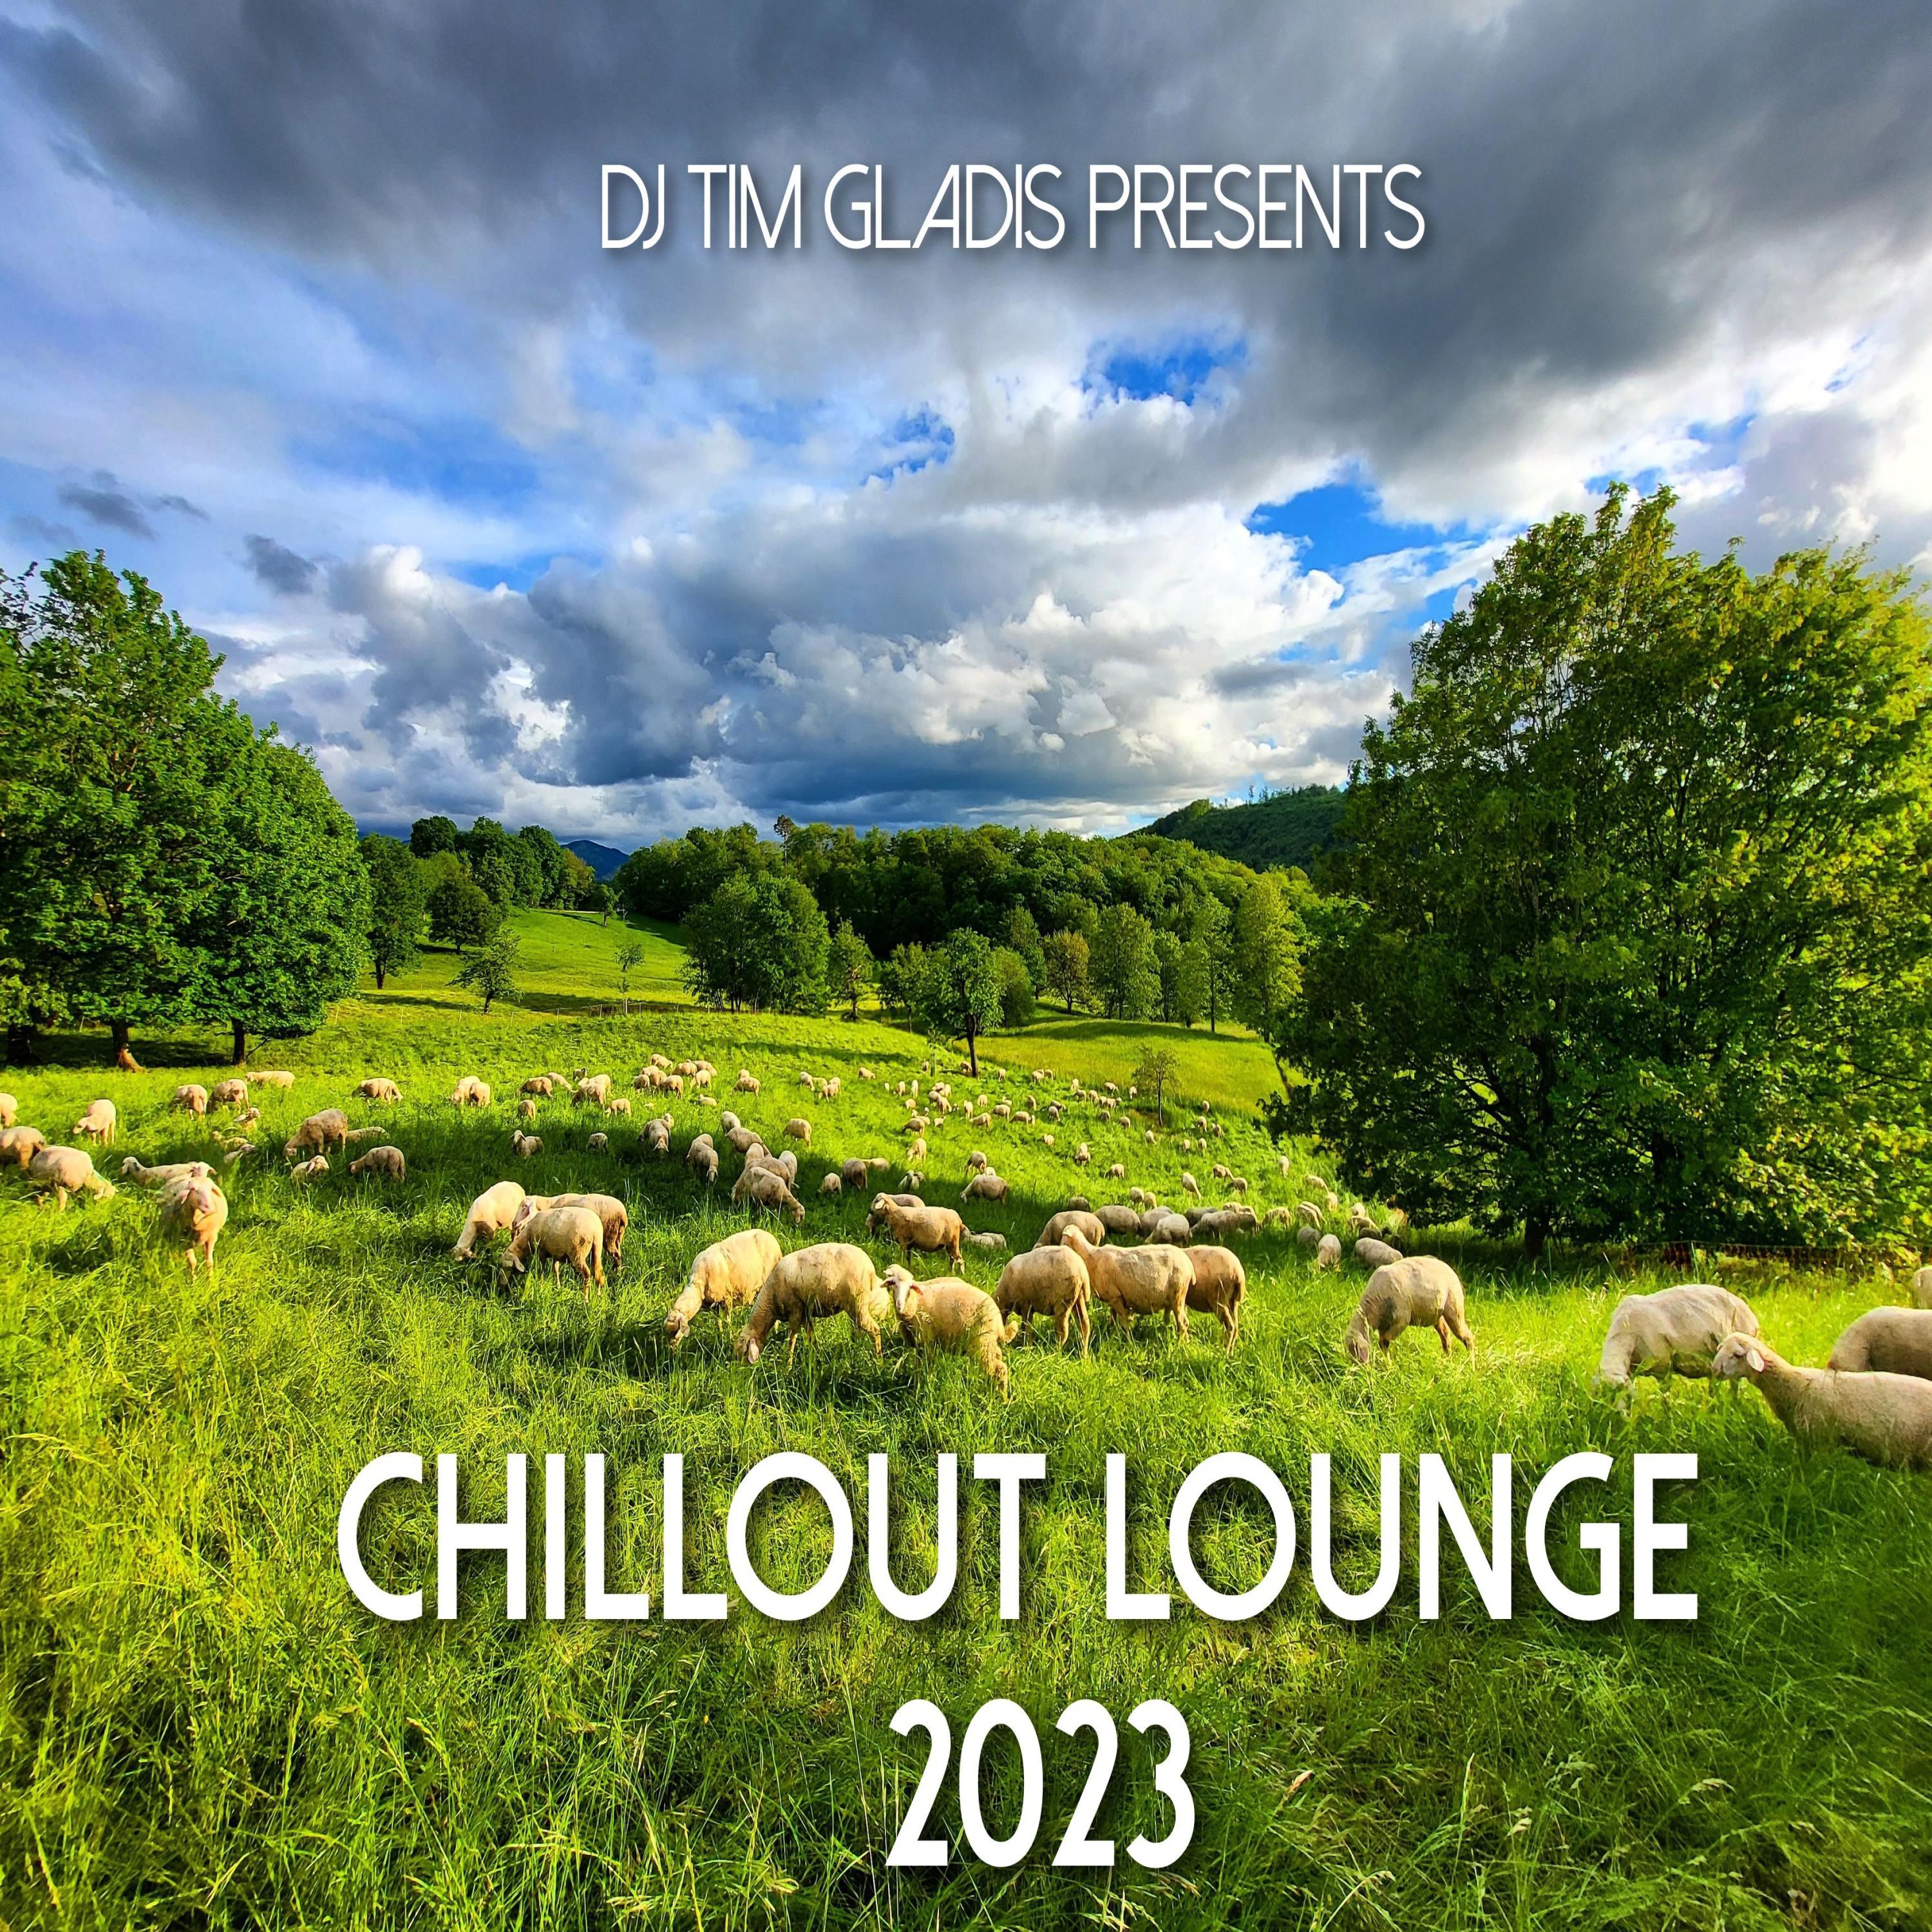 Steven Phillips - Lounge Sound 7